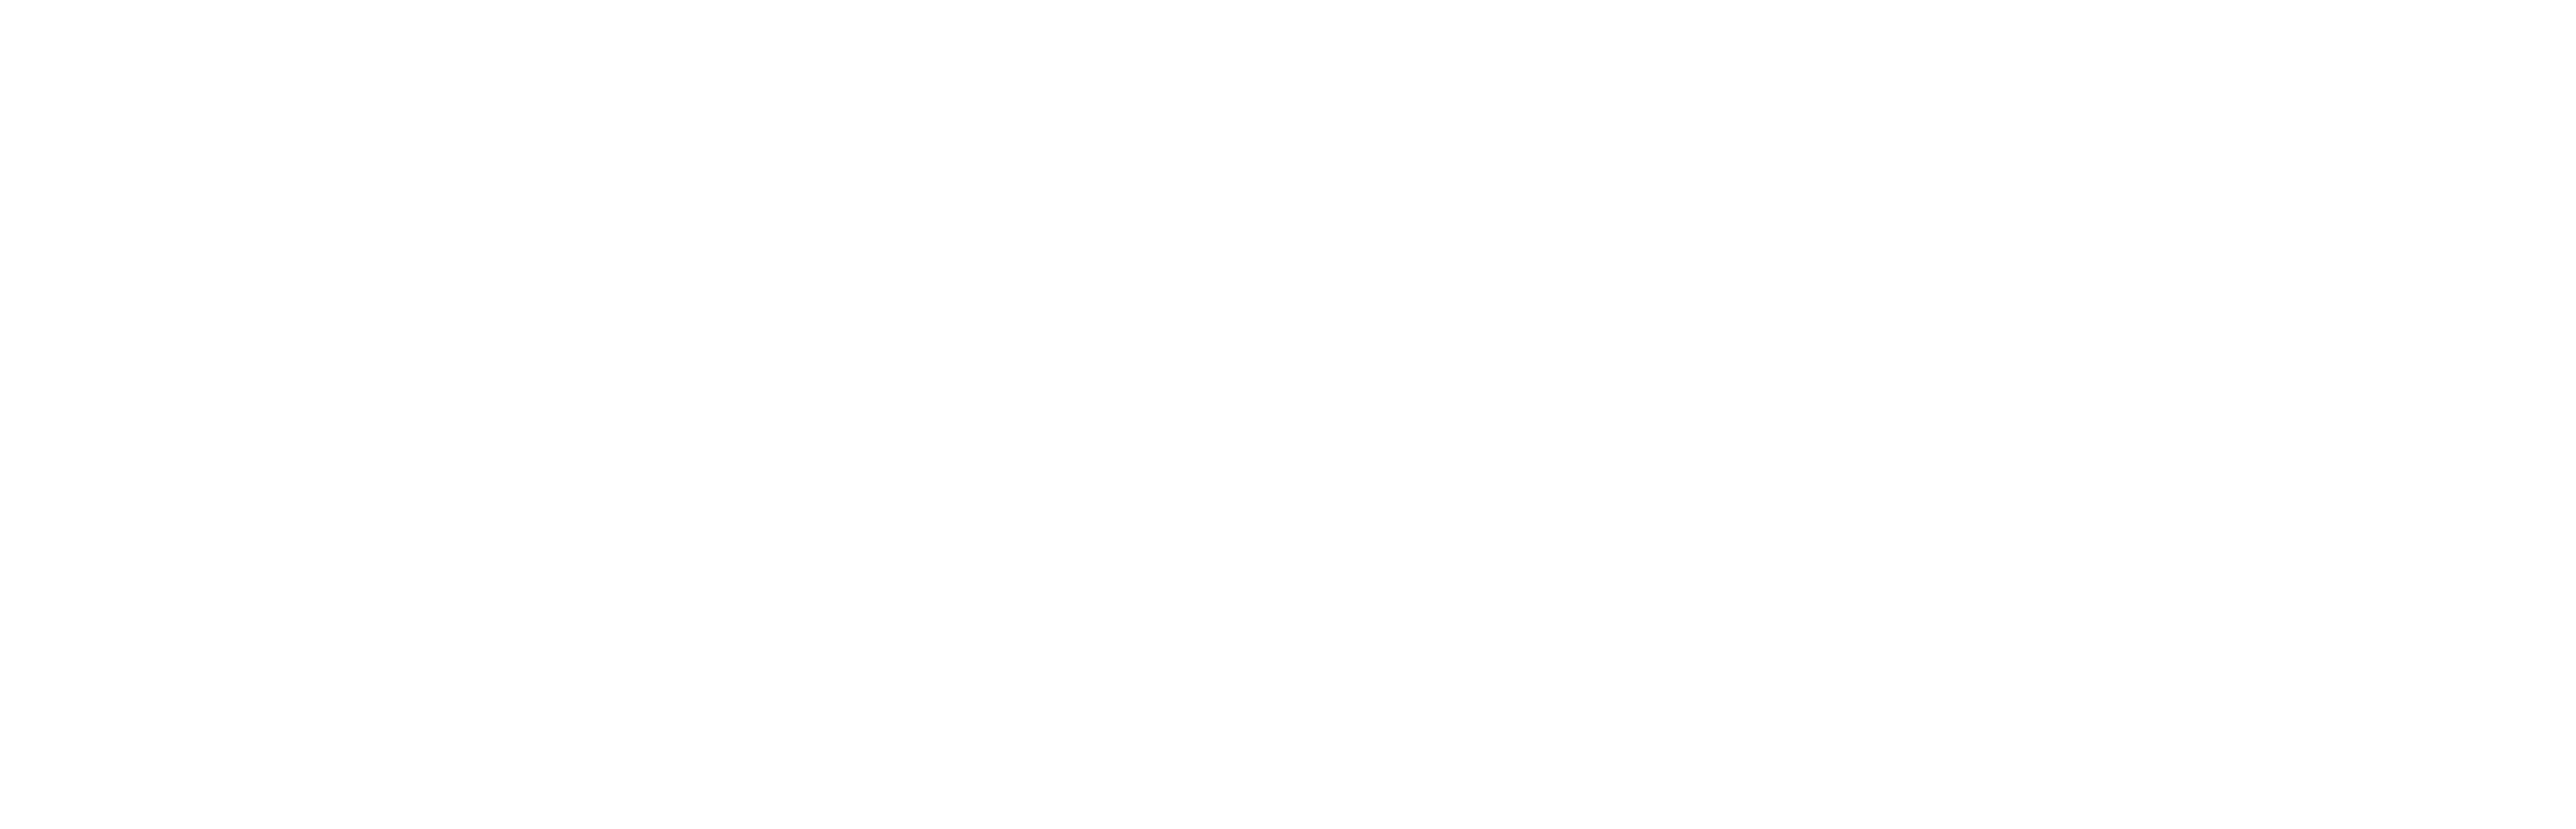 https://www.saastock.com/wp-content/uploads/2020/09/Chargify-logo.png